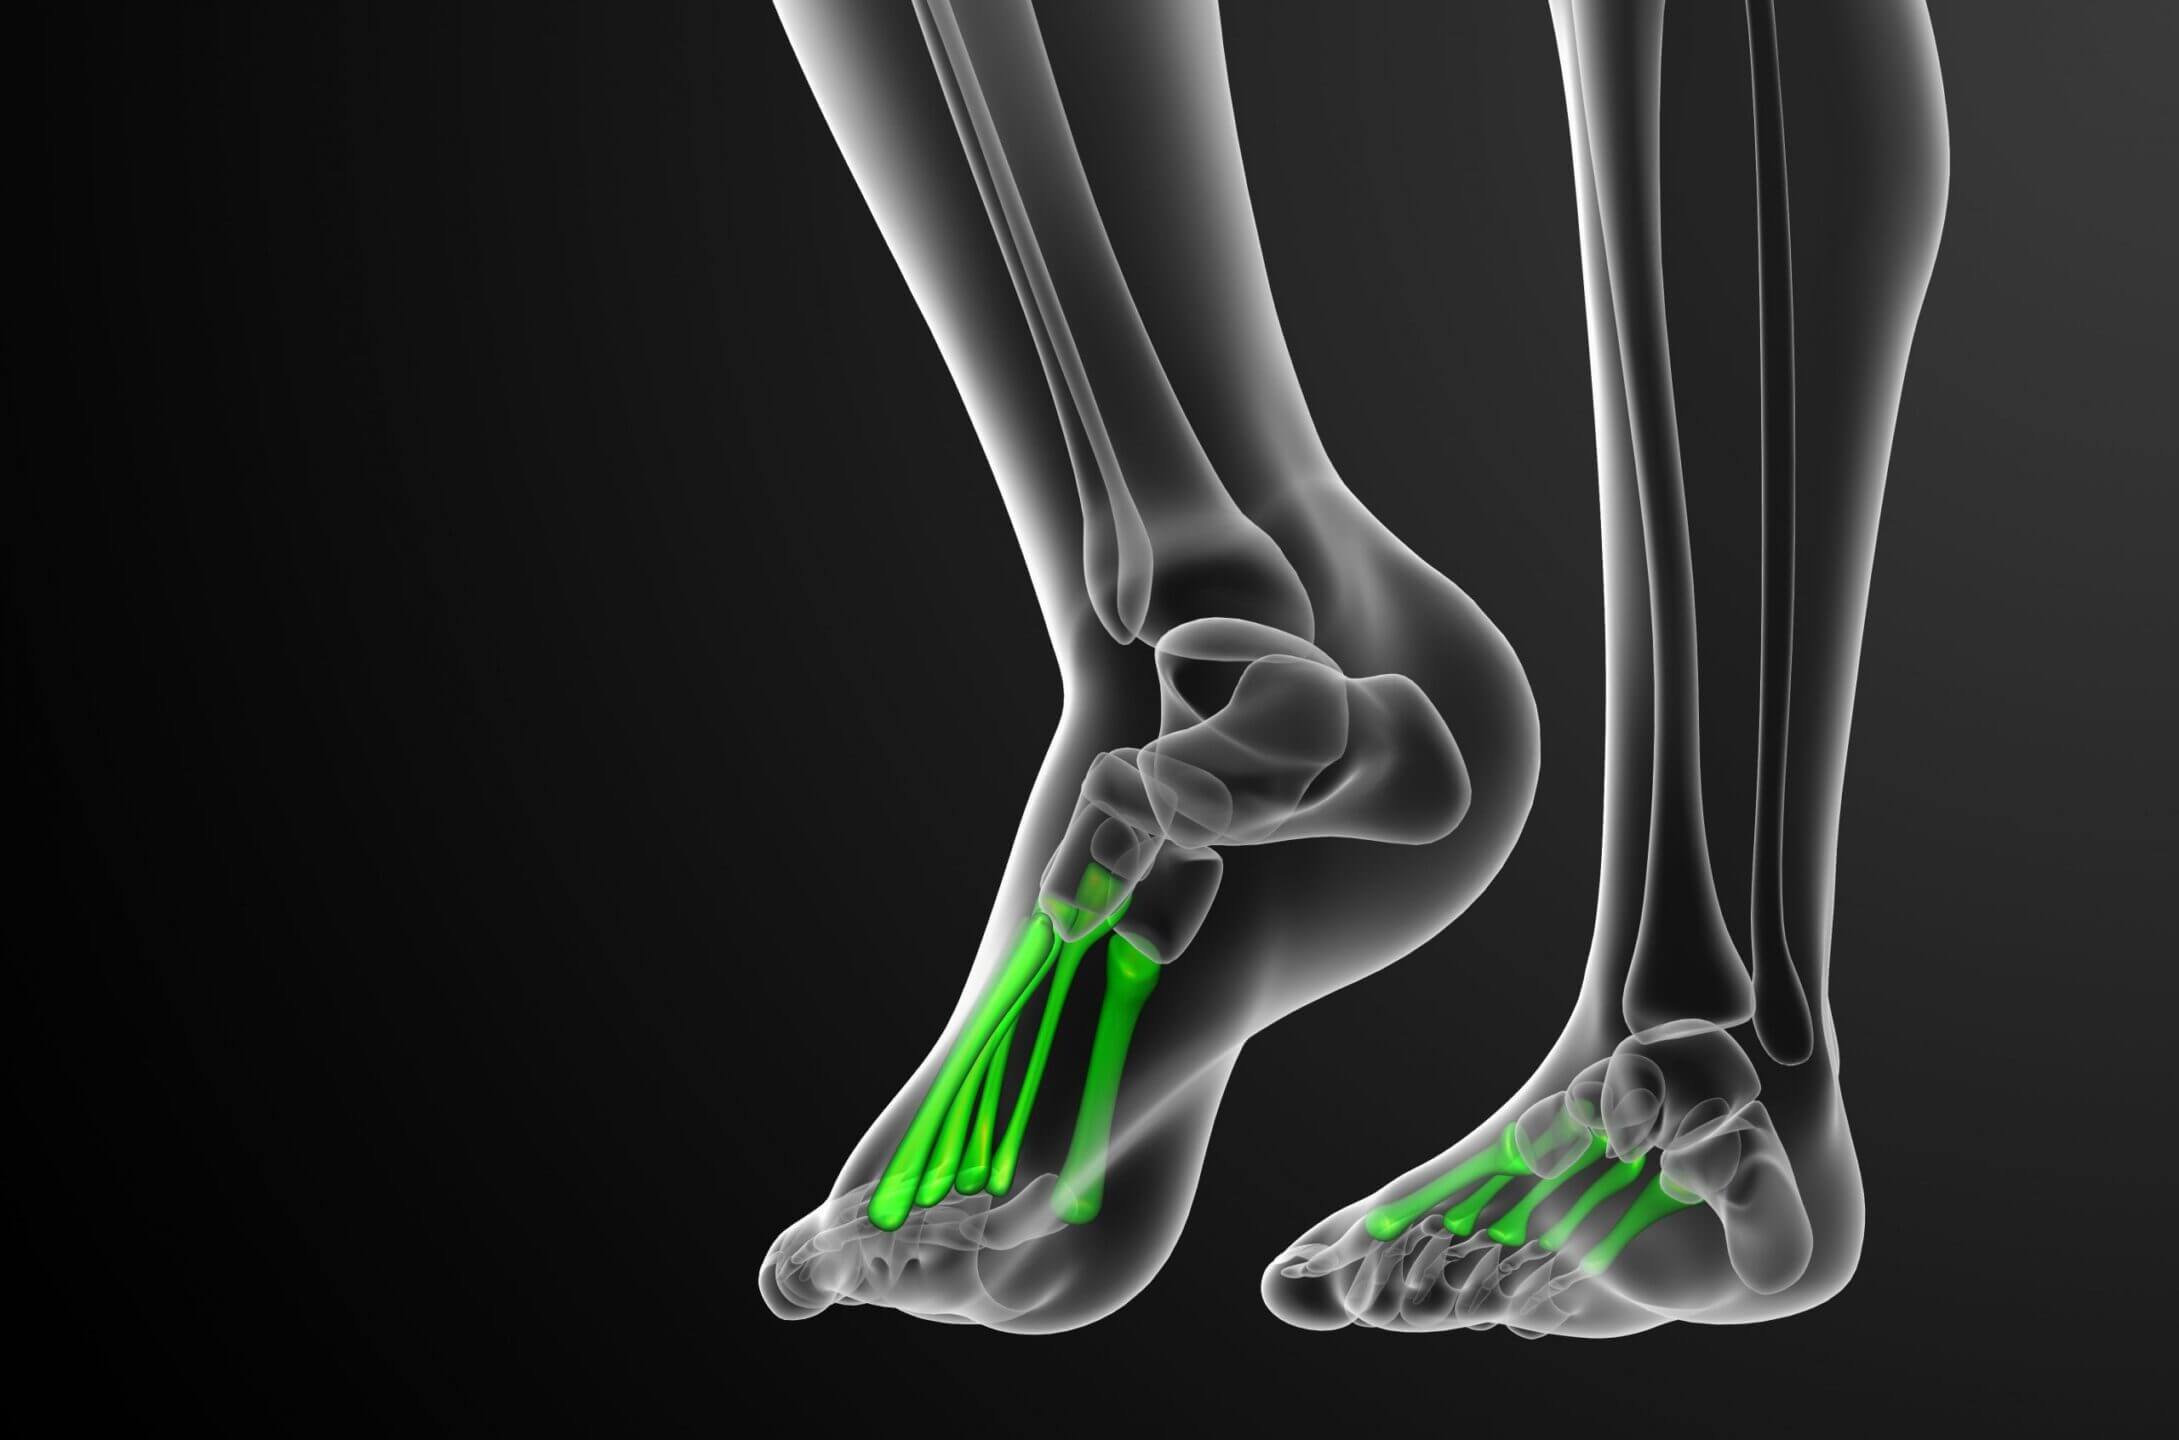 metatarsal bones in feet